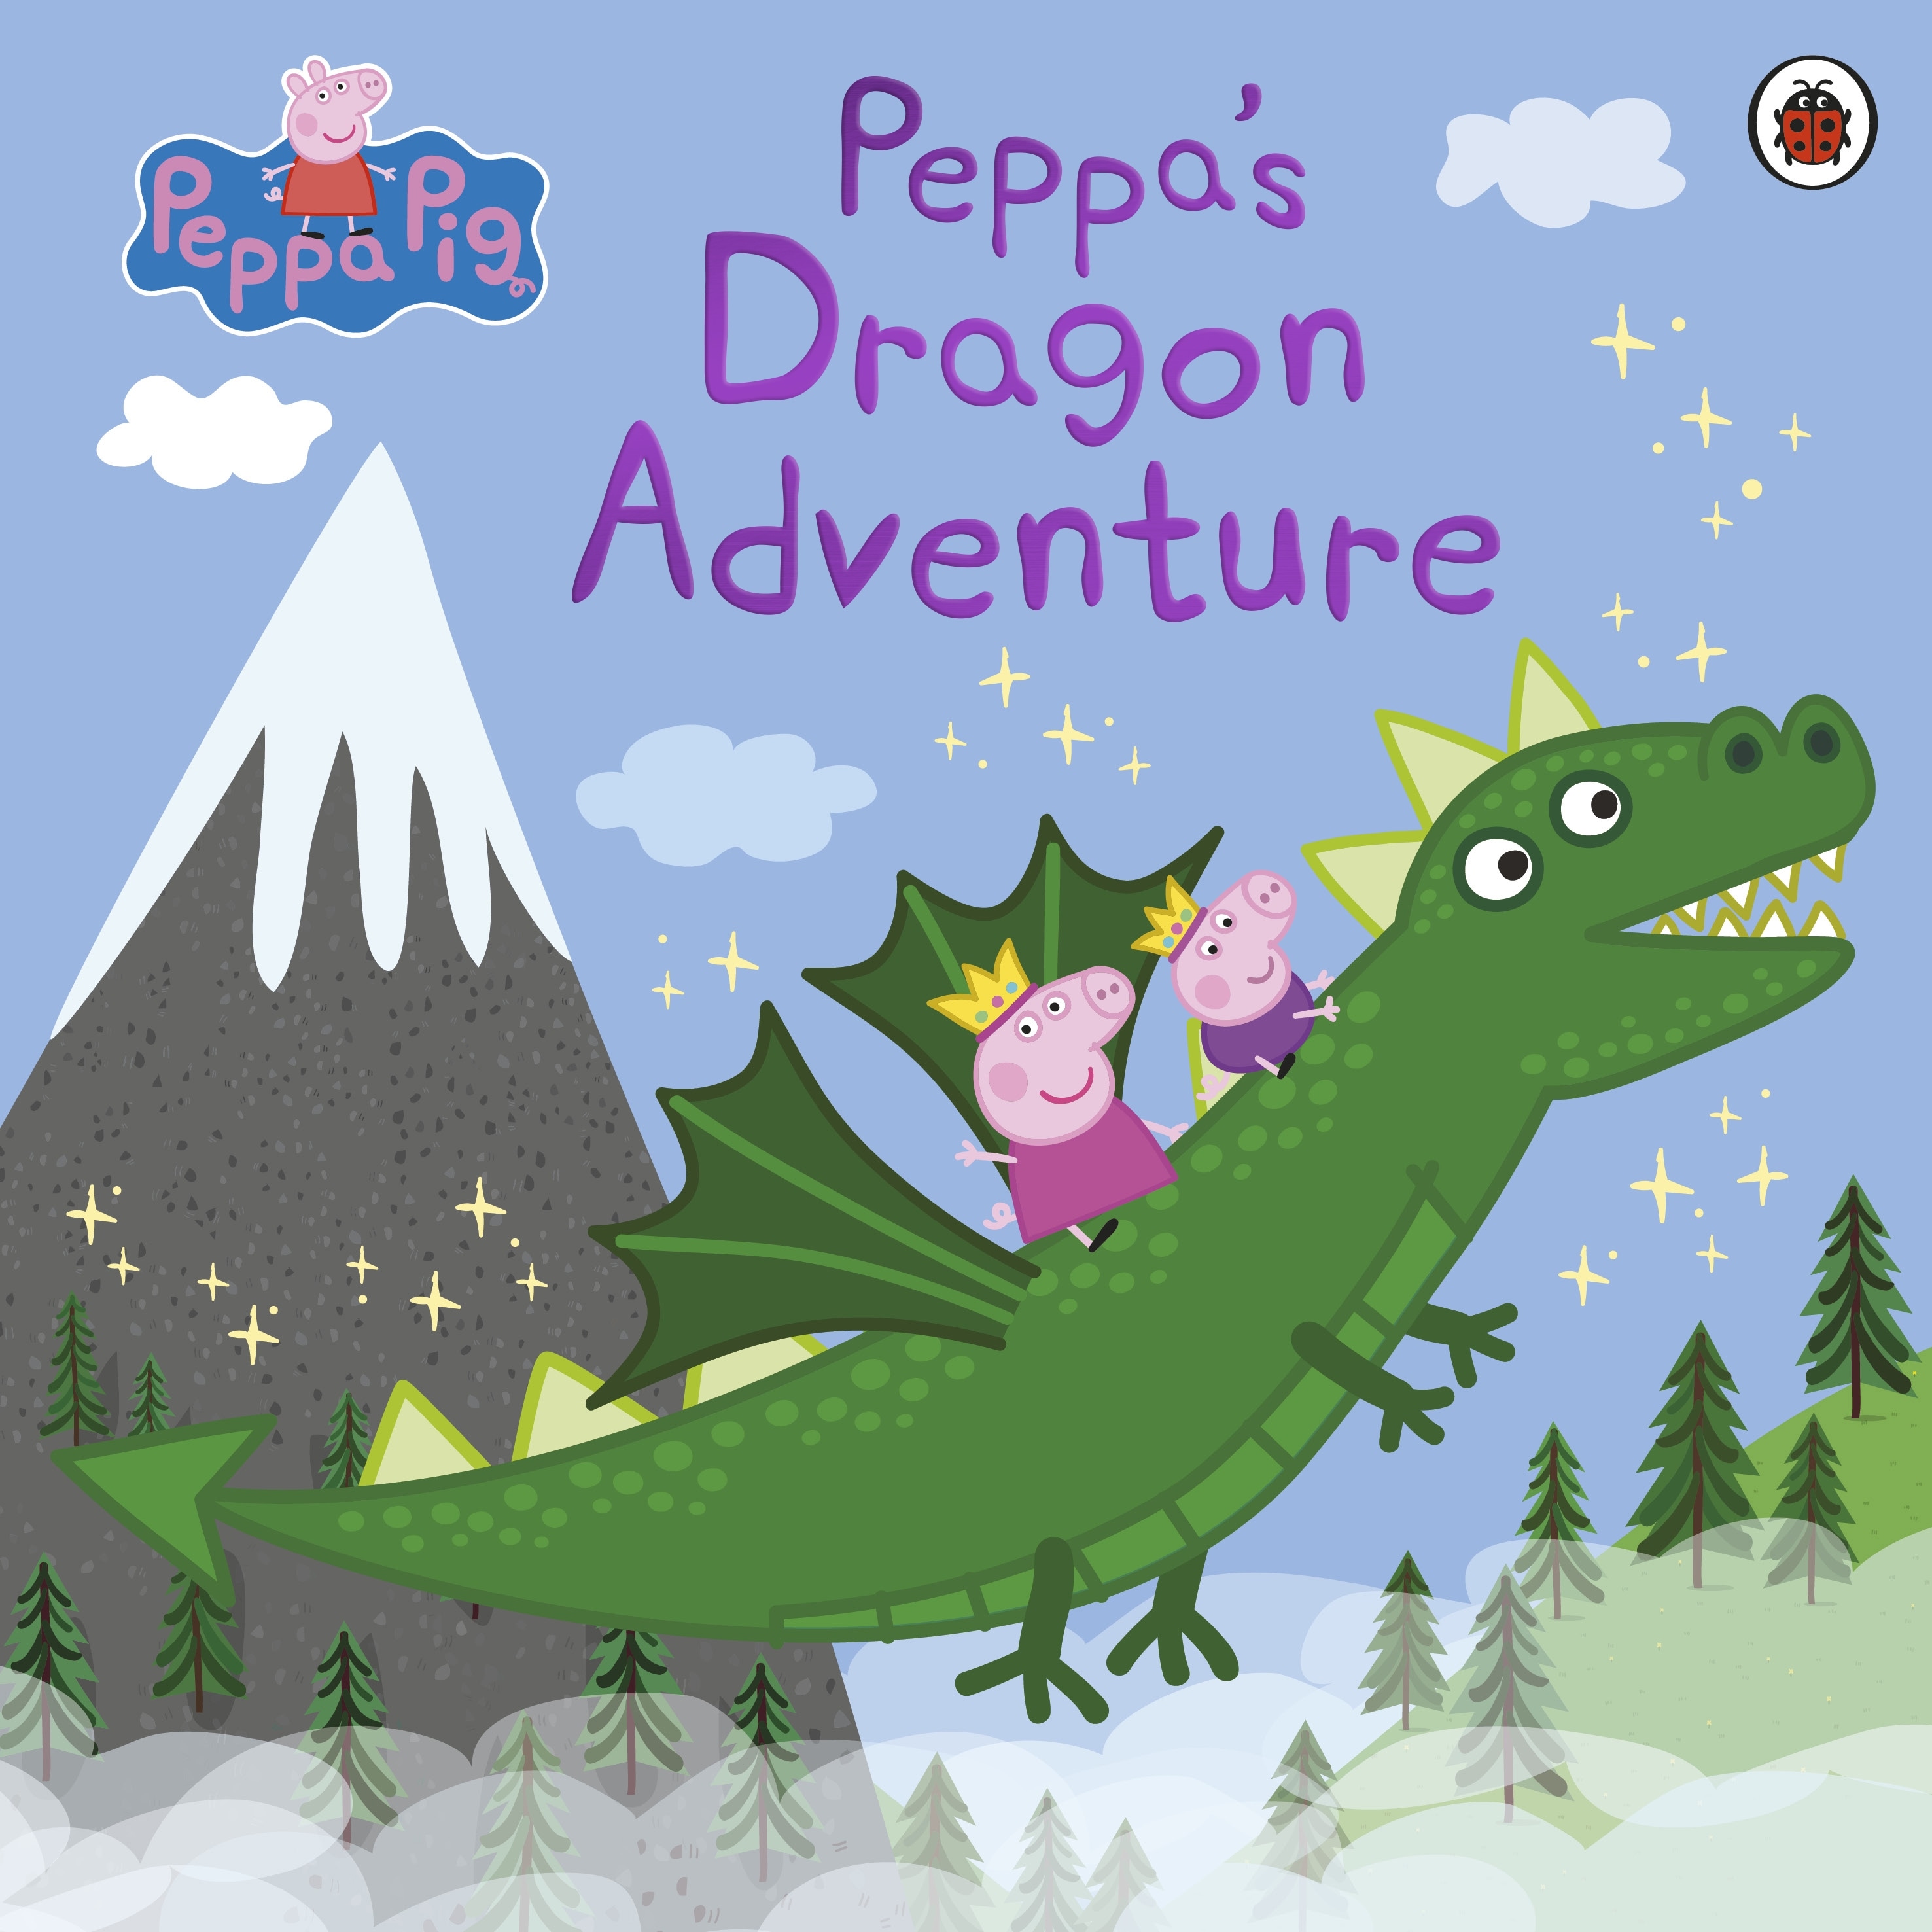 Book “Peppa Pig: Peppa's Dragon Adventure” by Peppa Pig — September 1, 2022